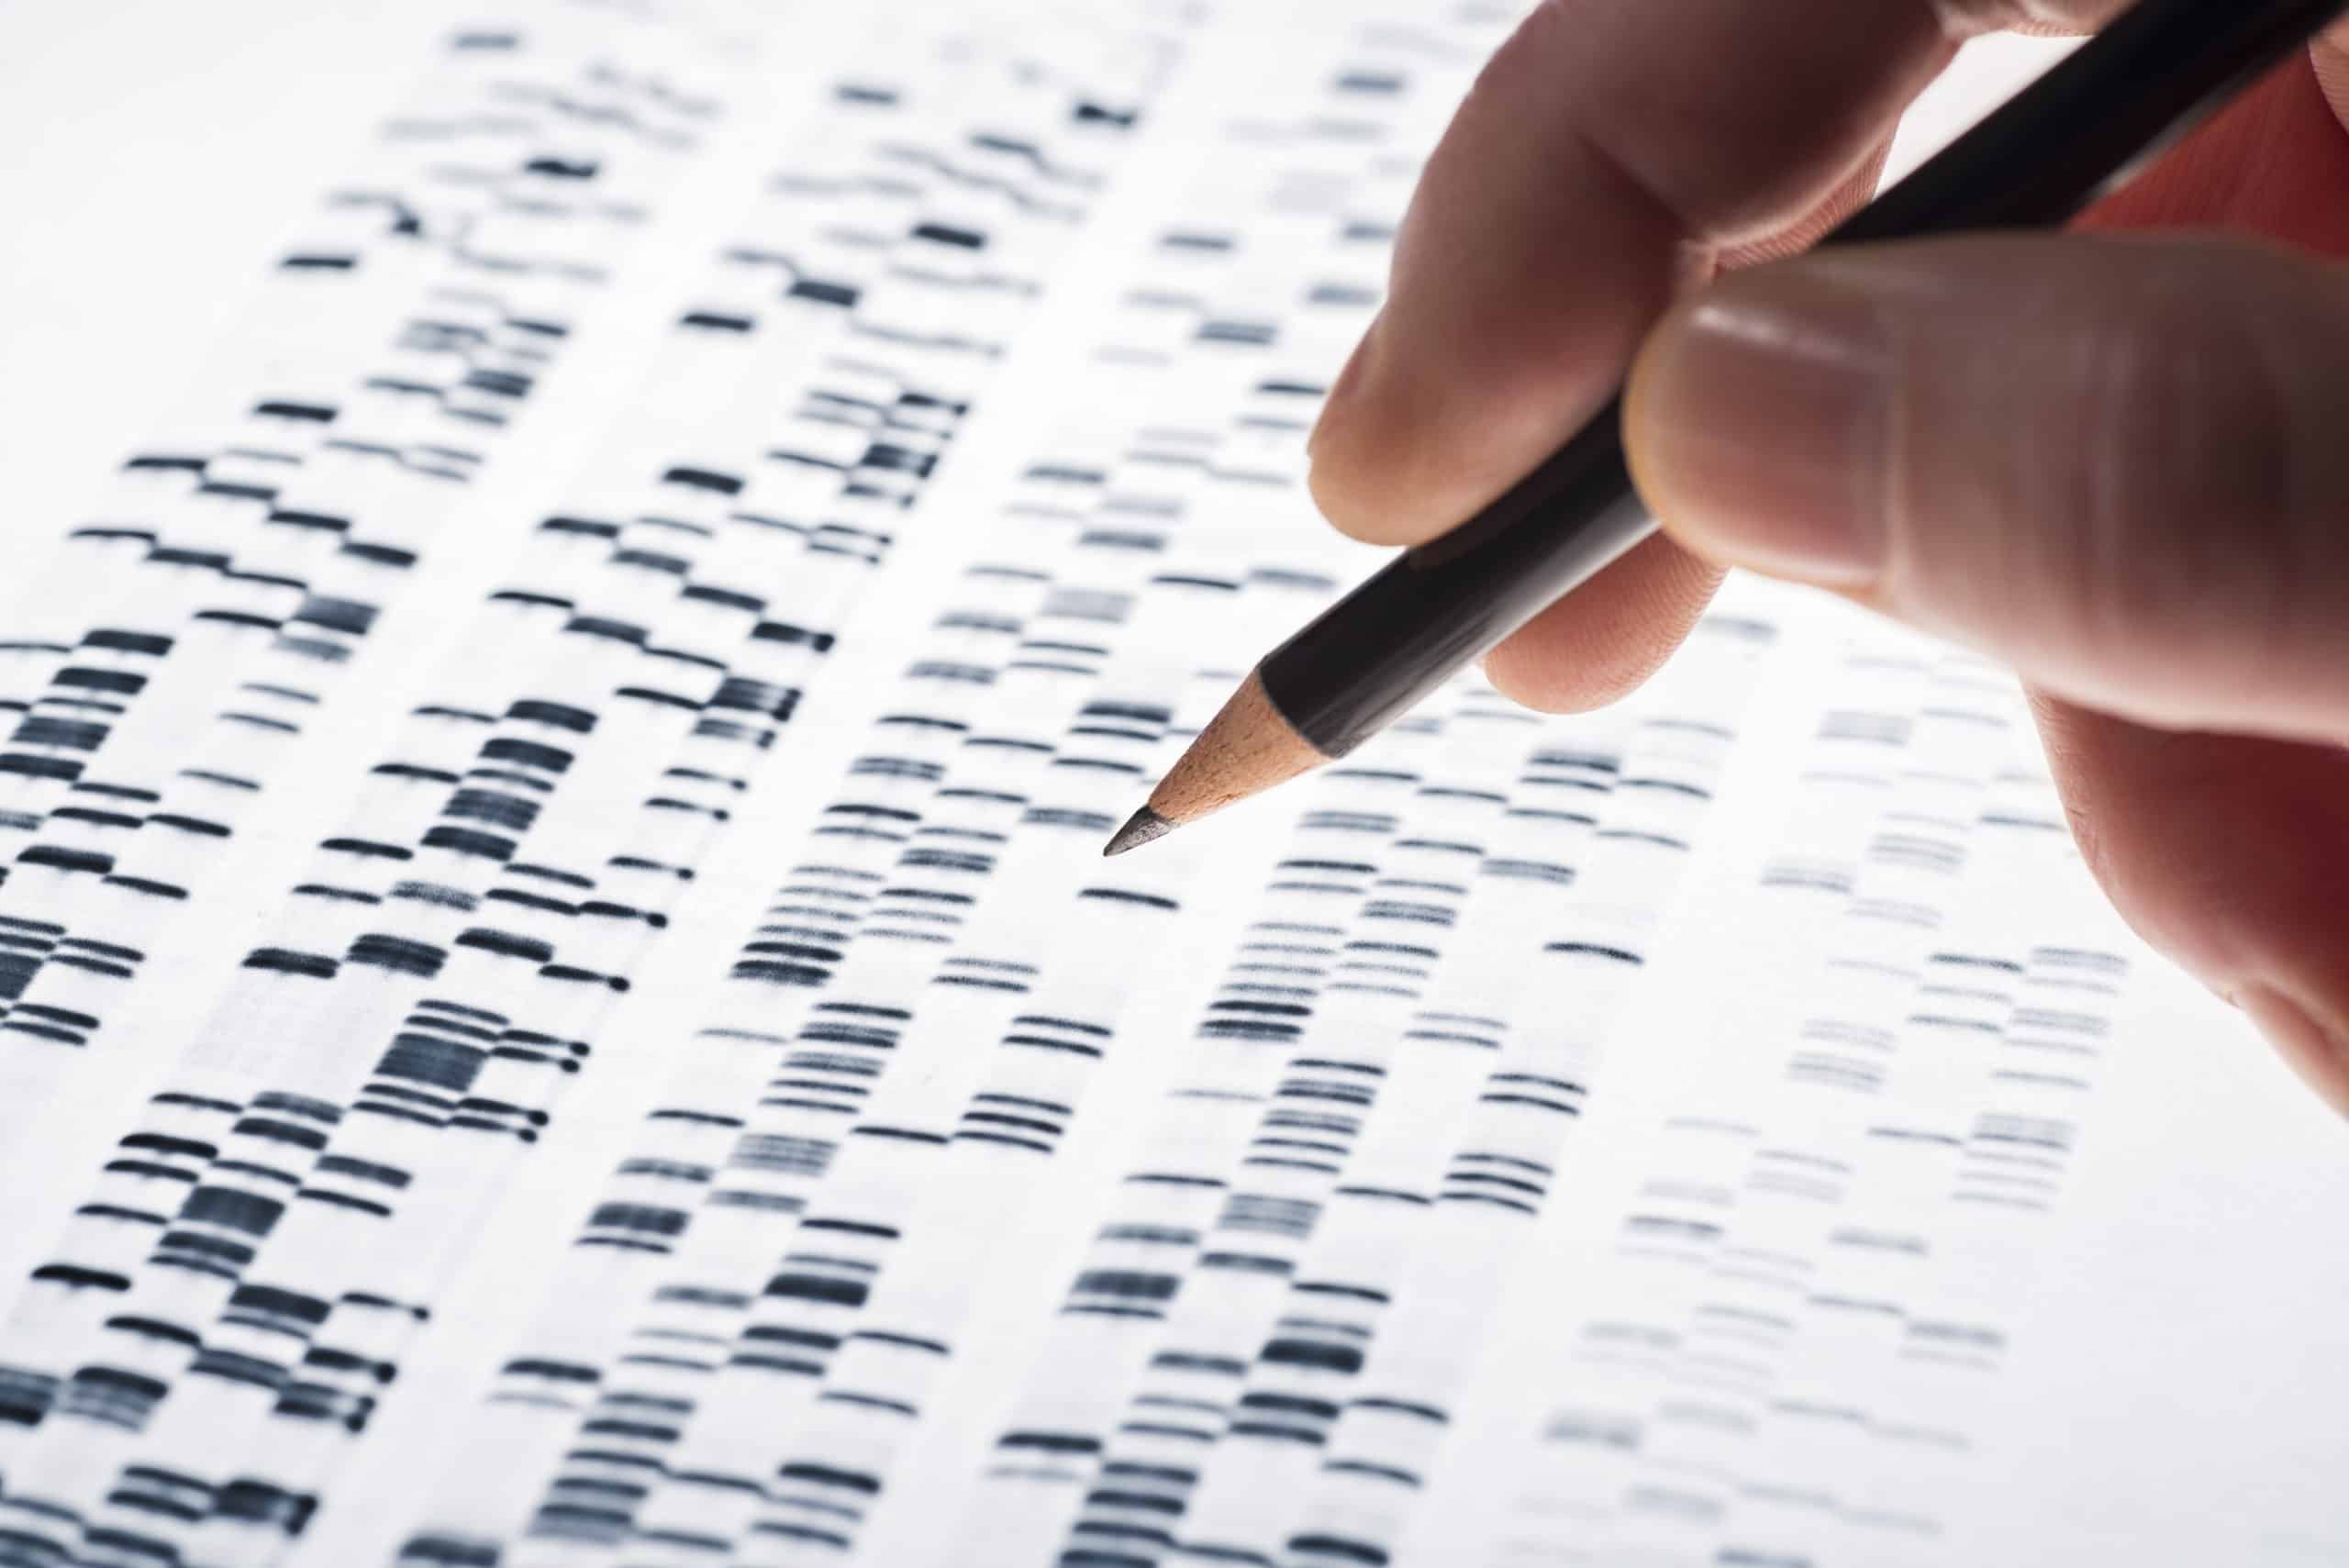 DNA - DNA profiling